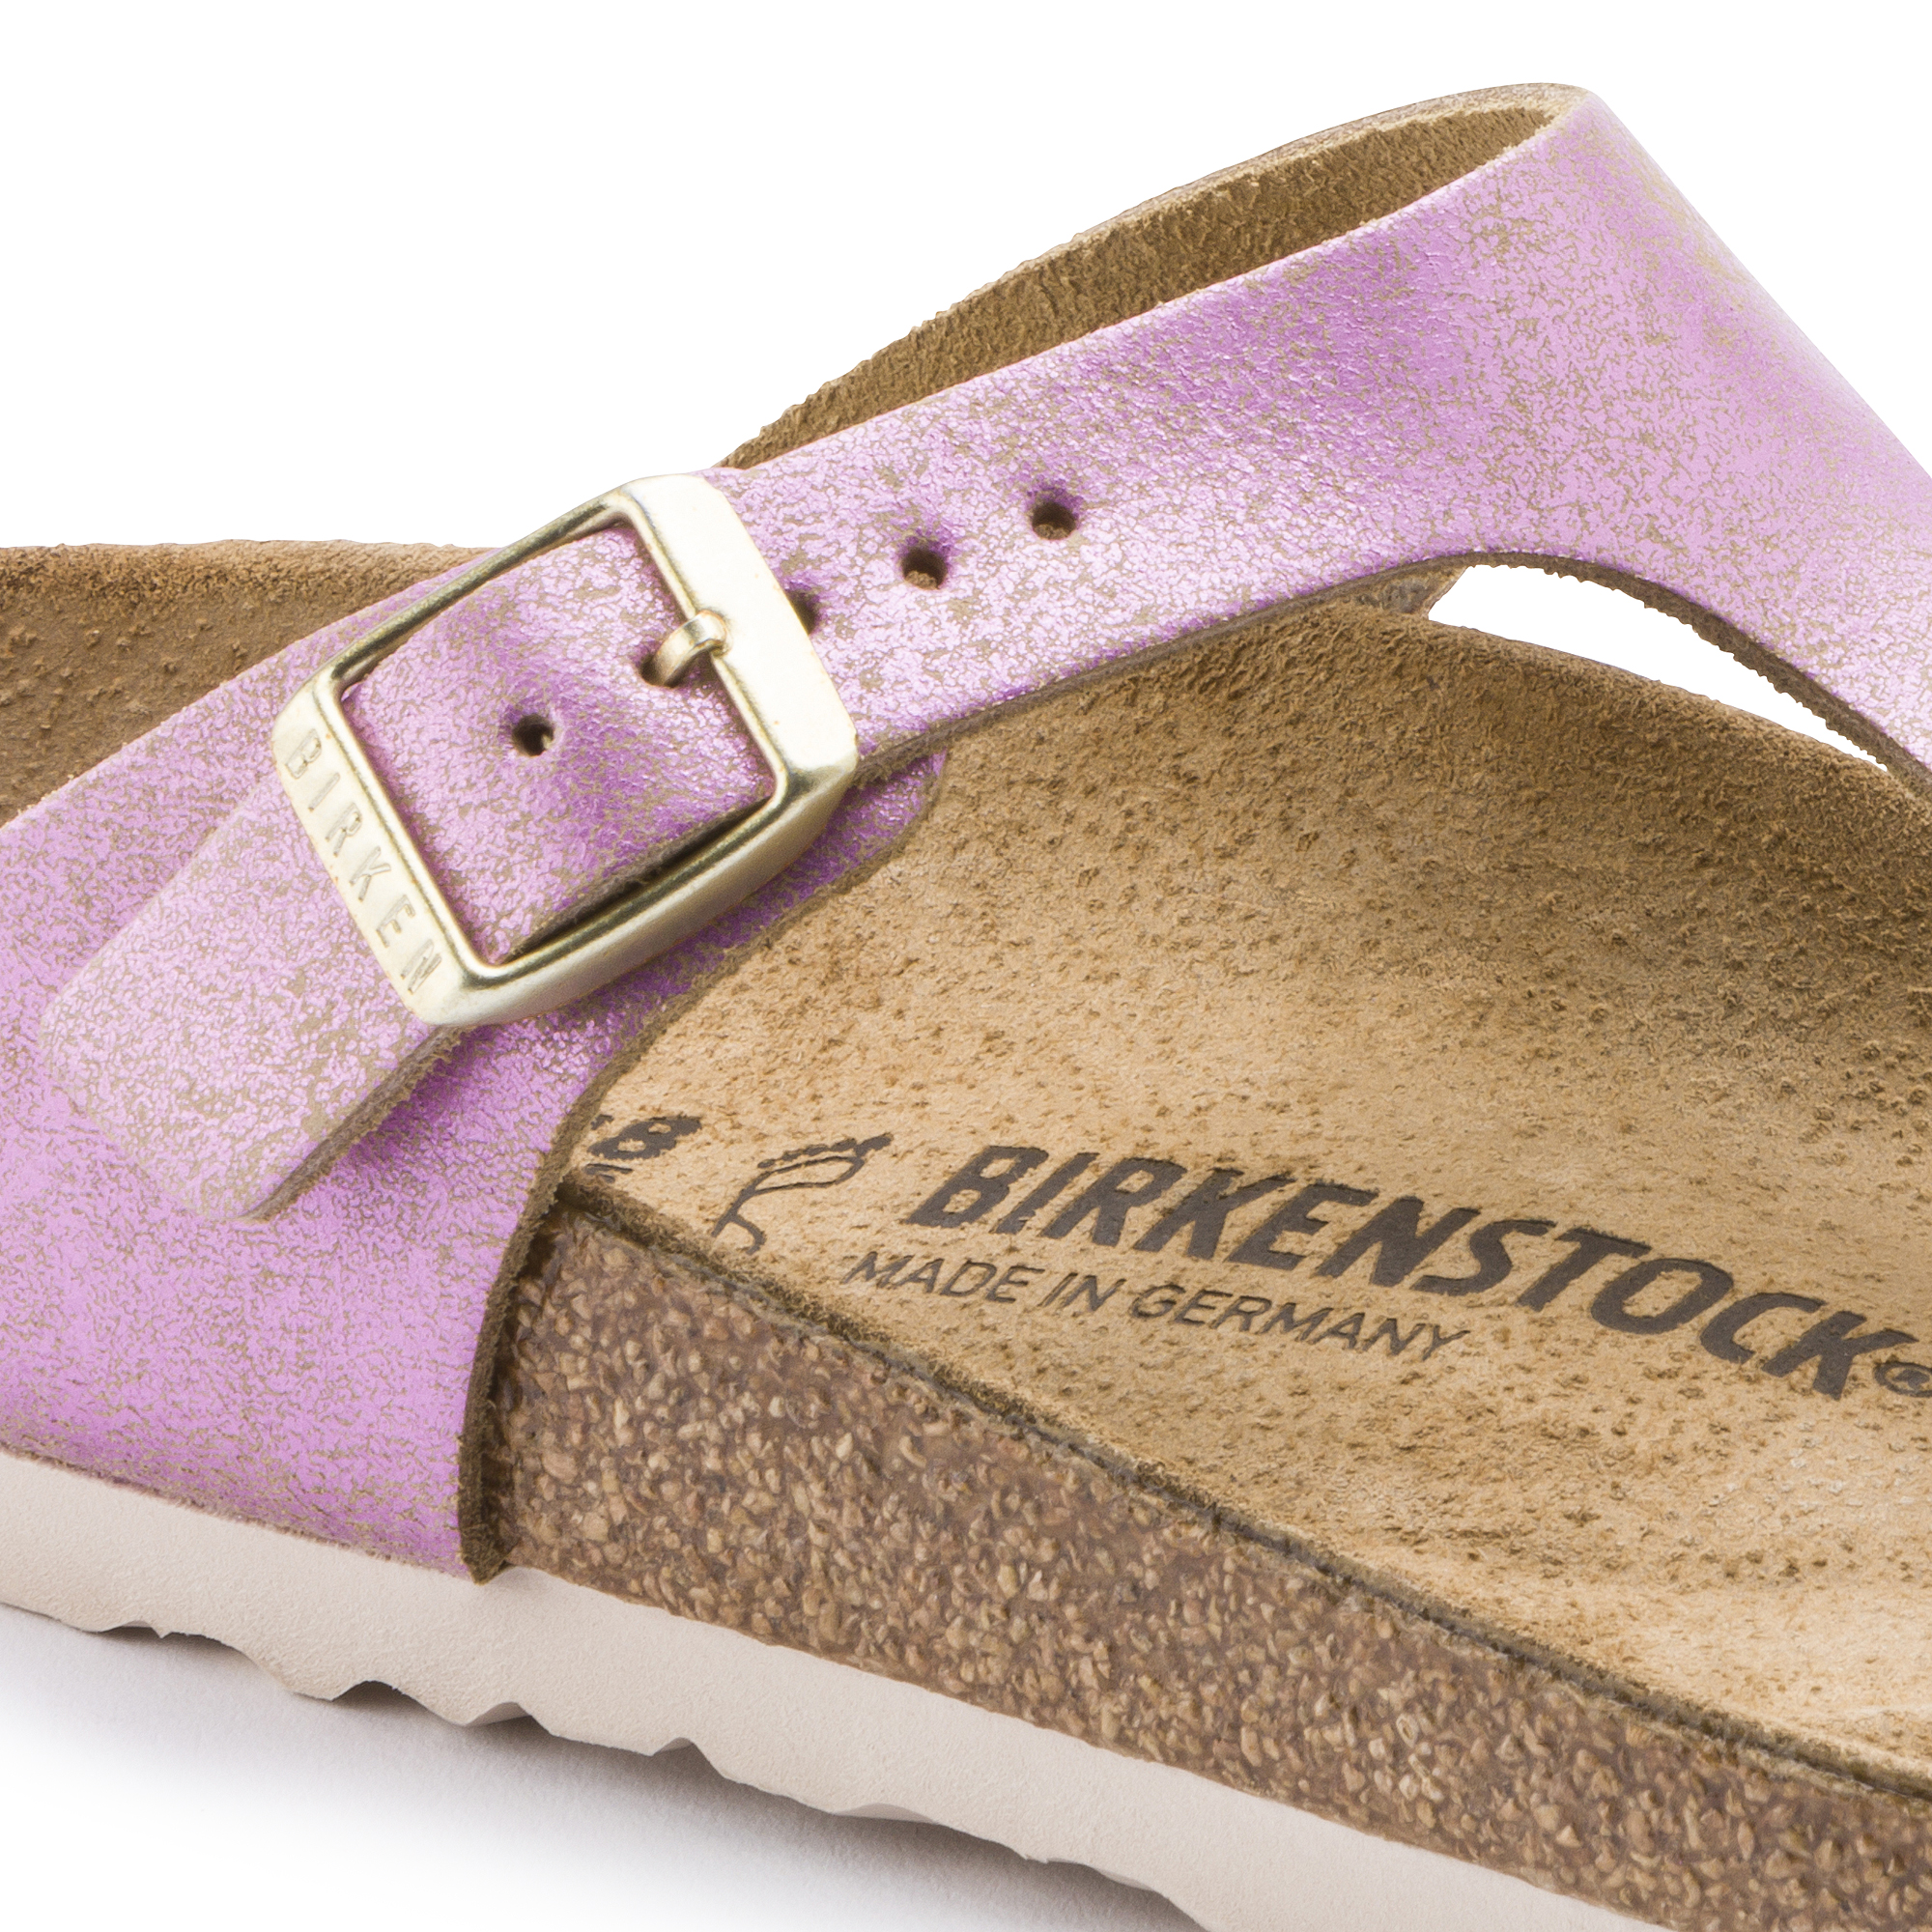 purple suede birkenstocks